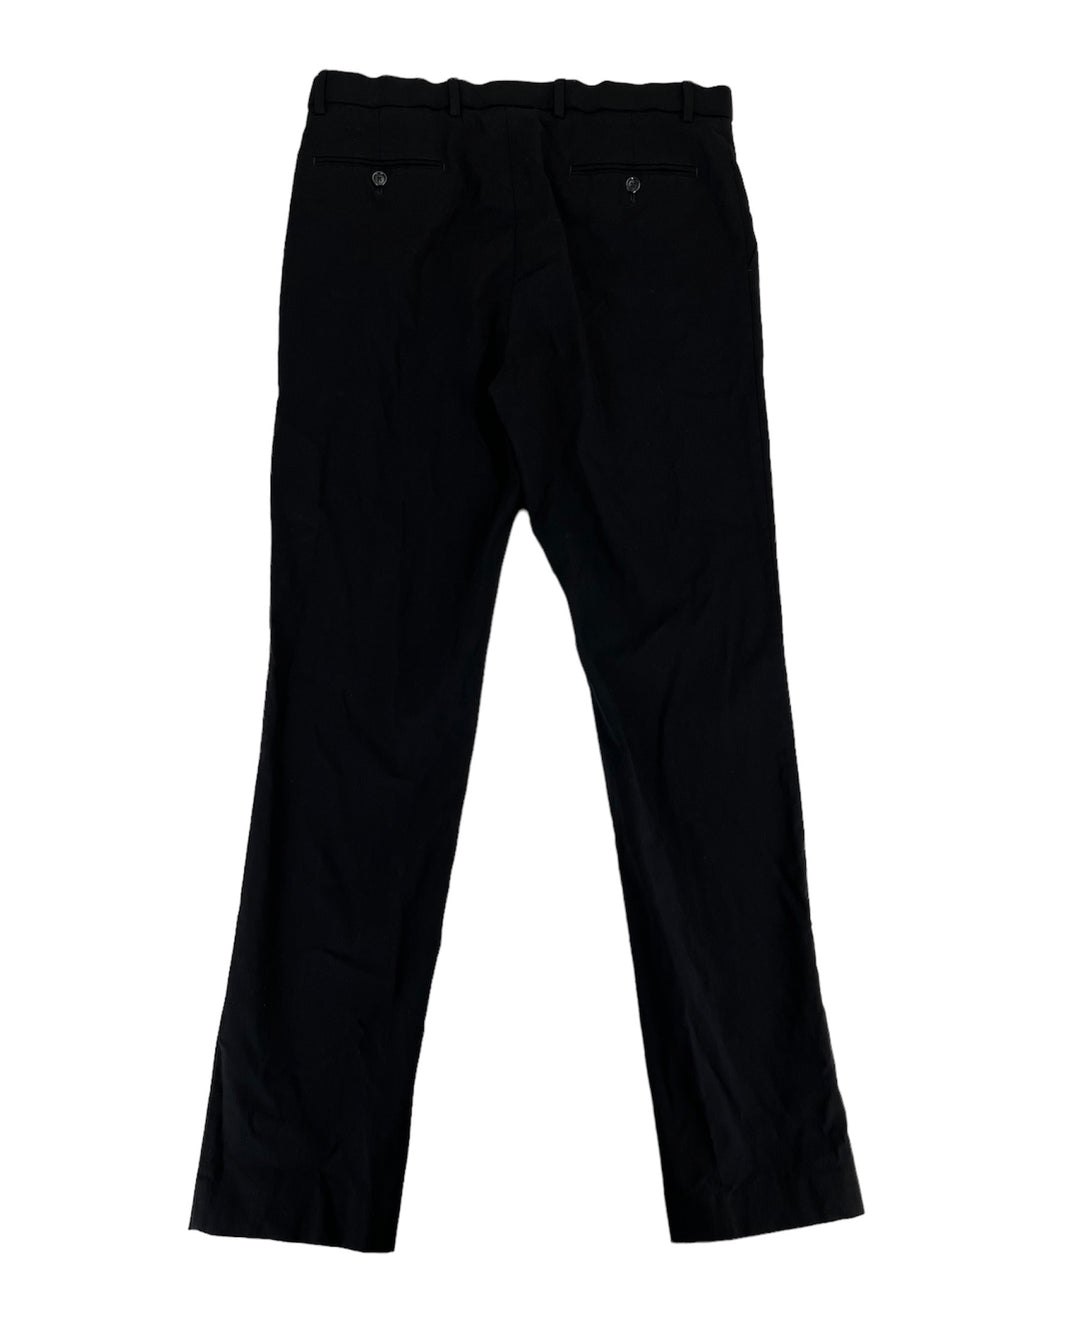 Tommy Hilfiger Men's Stretch Pockets Dress Pants Black Size 34W x 34L